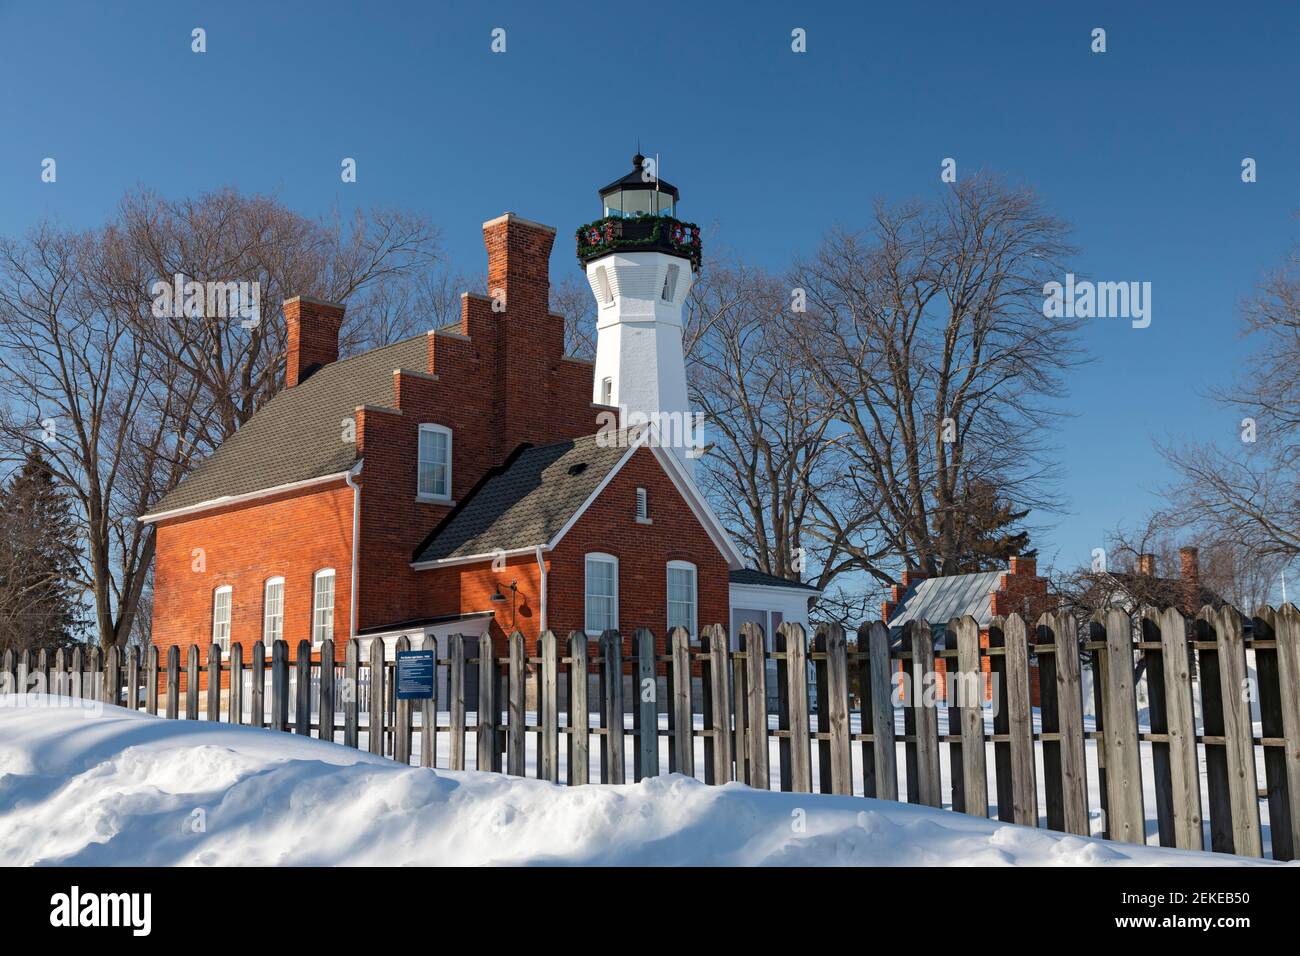 Port Sanilac, Michigan - The Port Sanilac Lighthouse on Lake Huron. Stock Photo